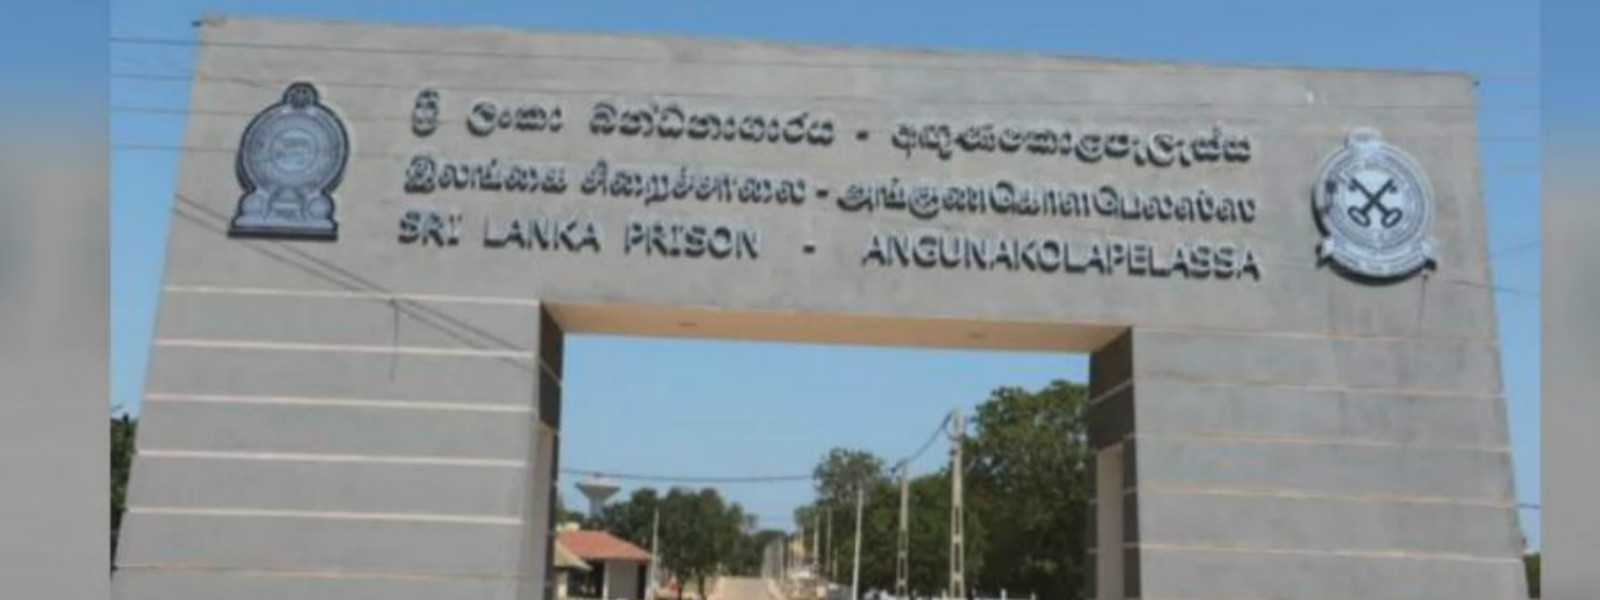 Inmate at Angunakolapelessa Prison reported dead